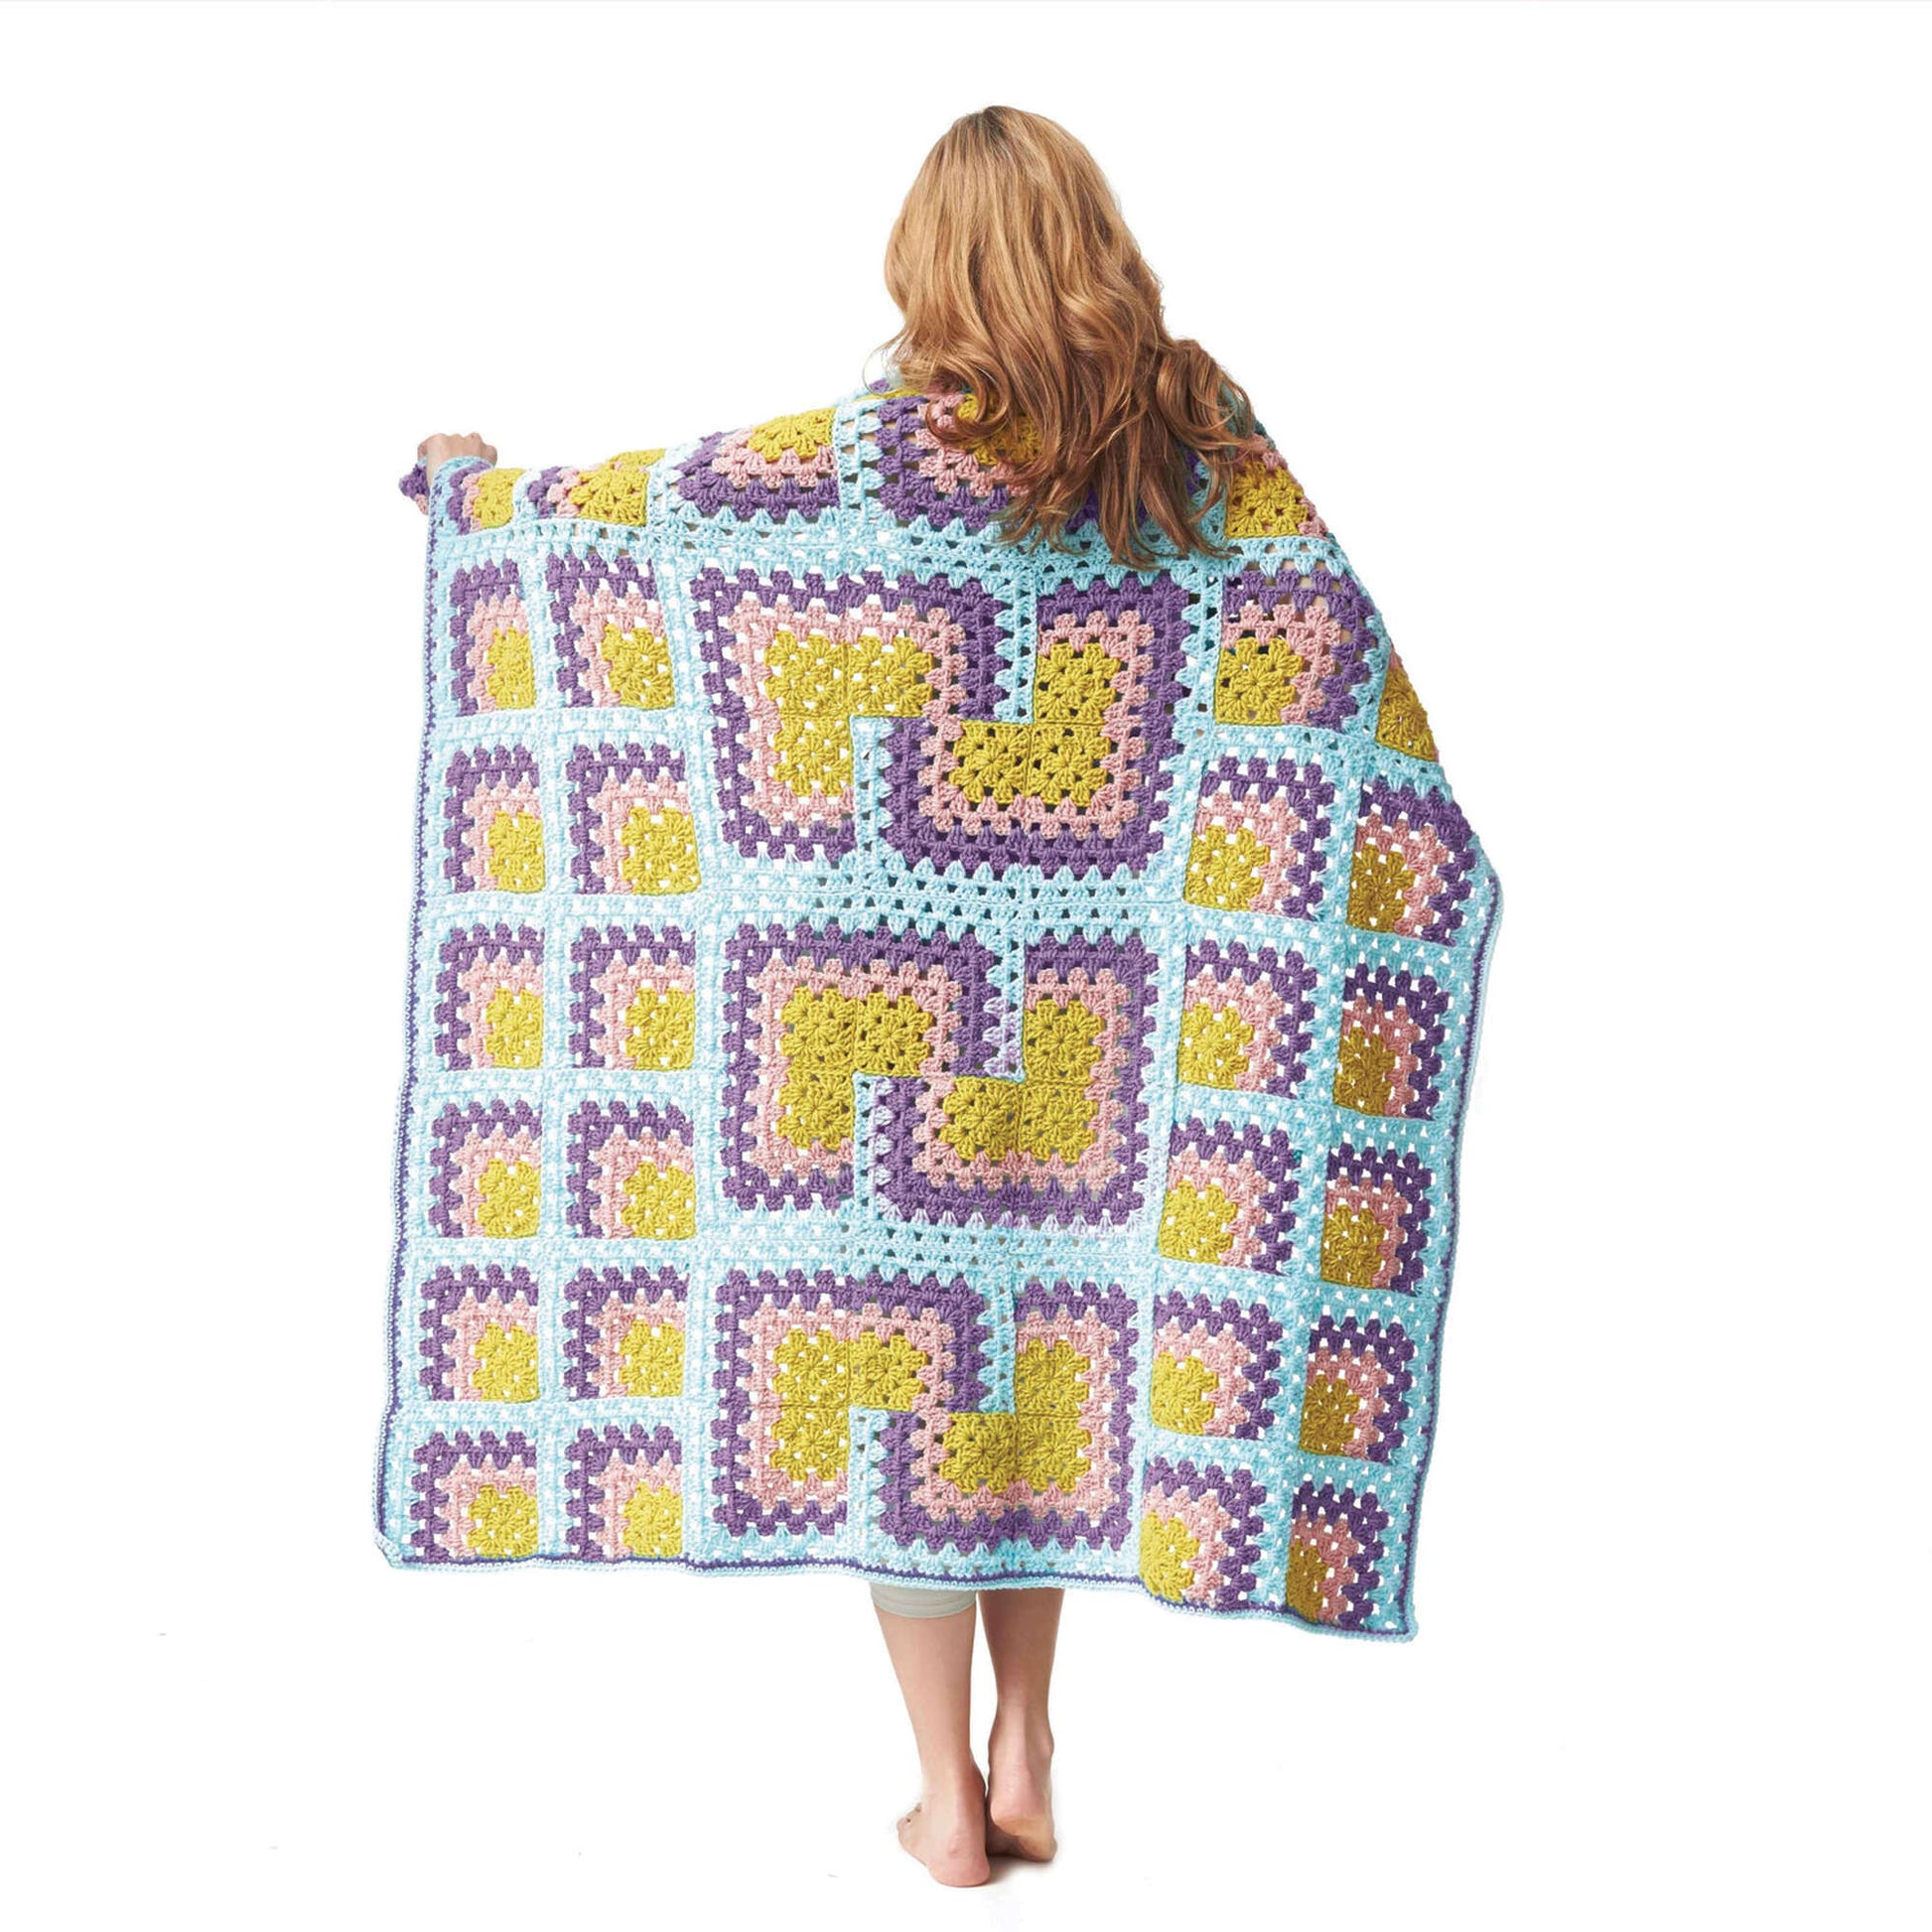 Free Bernat Mitered Granny Square Throw Crochet Pattern